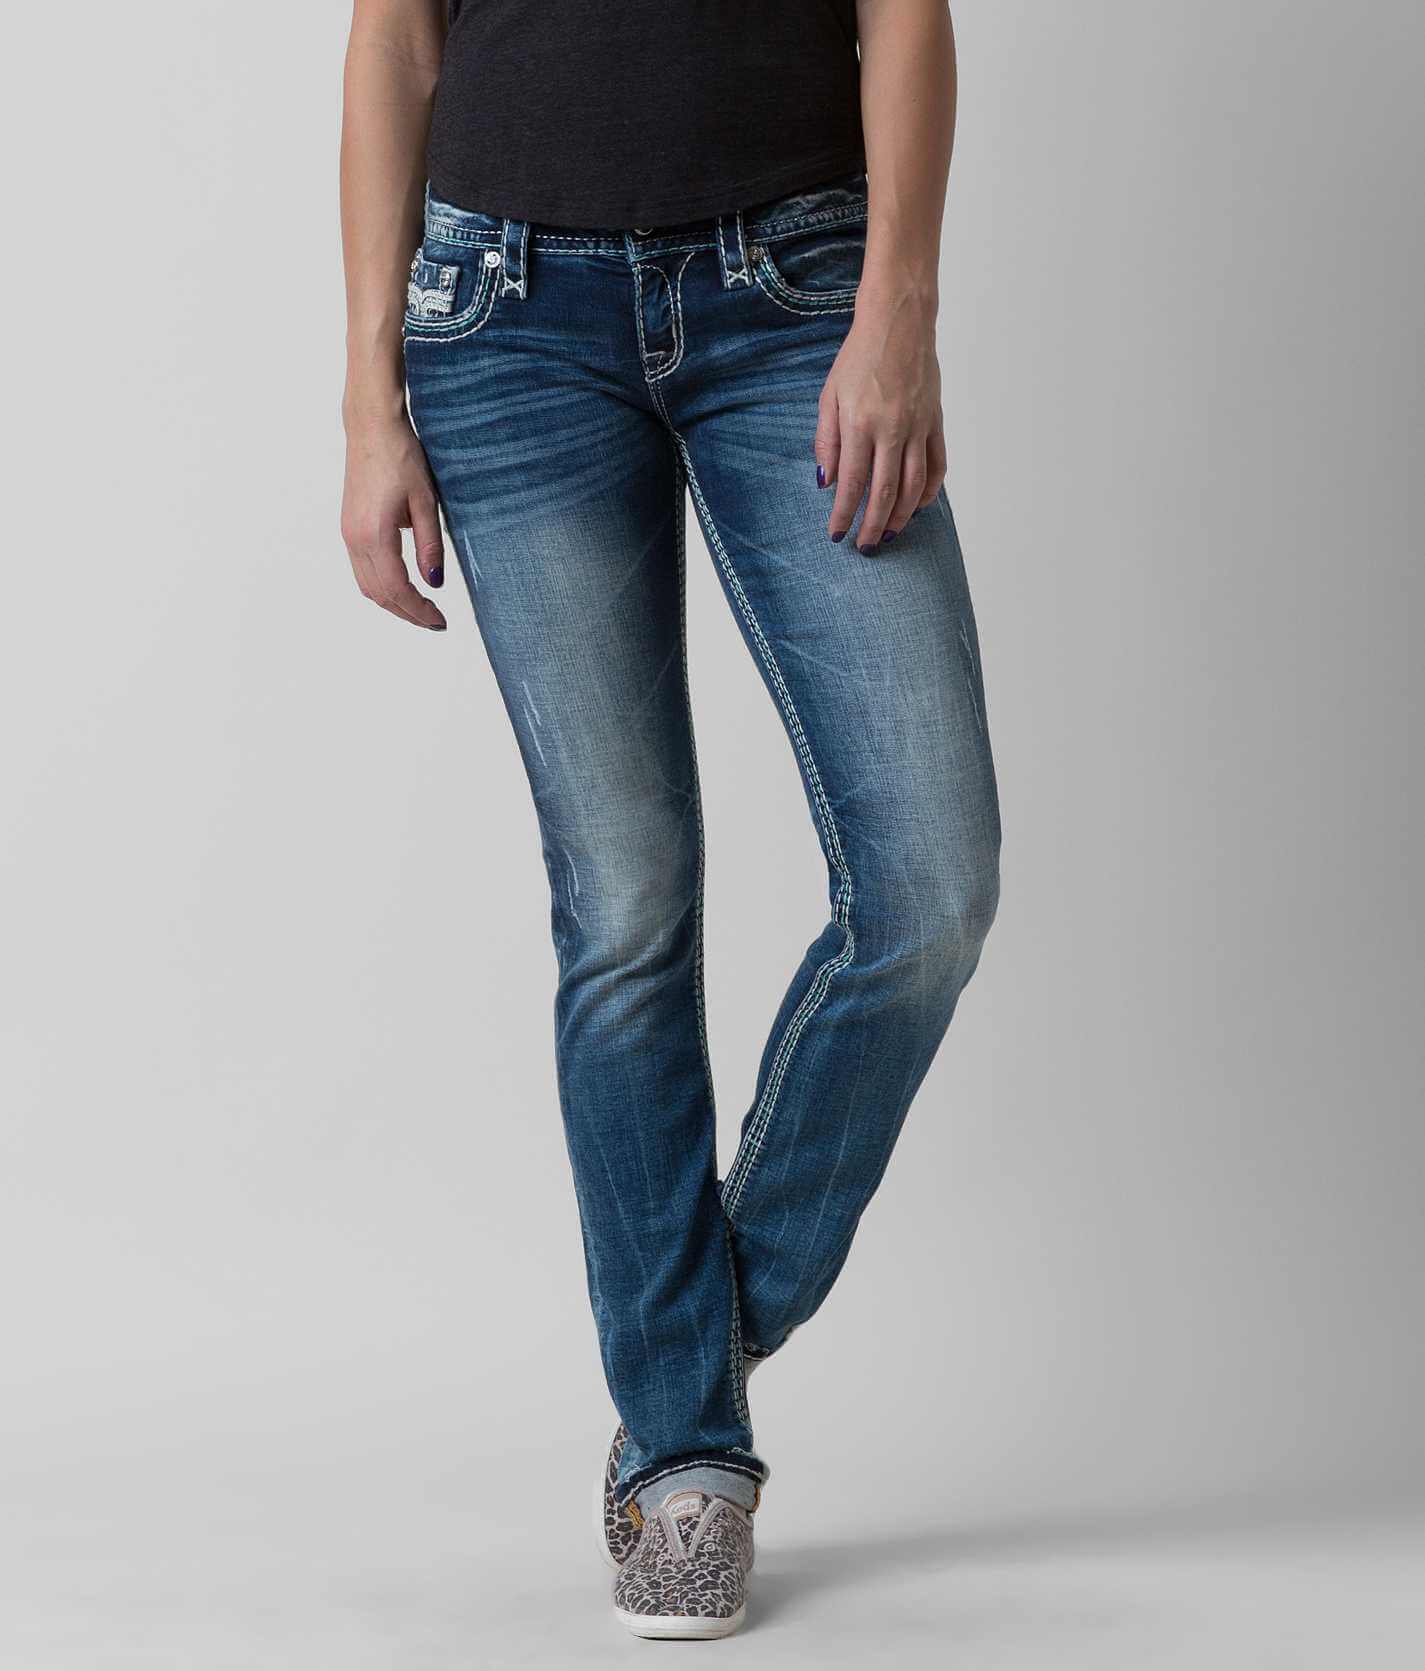 ebay lucky brand jeans